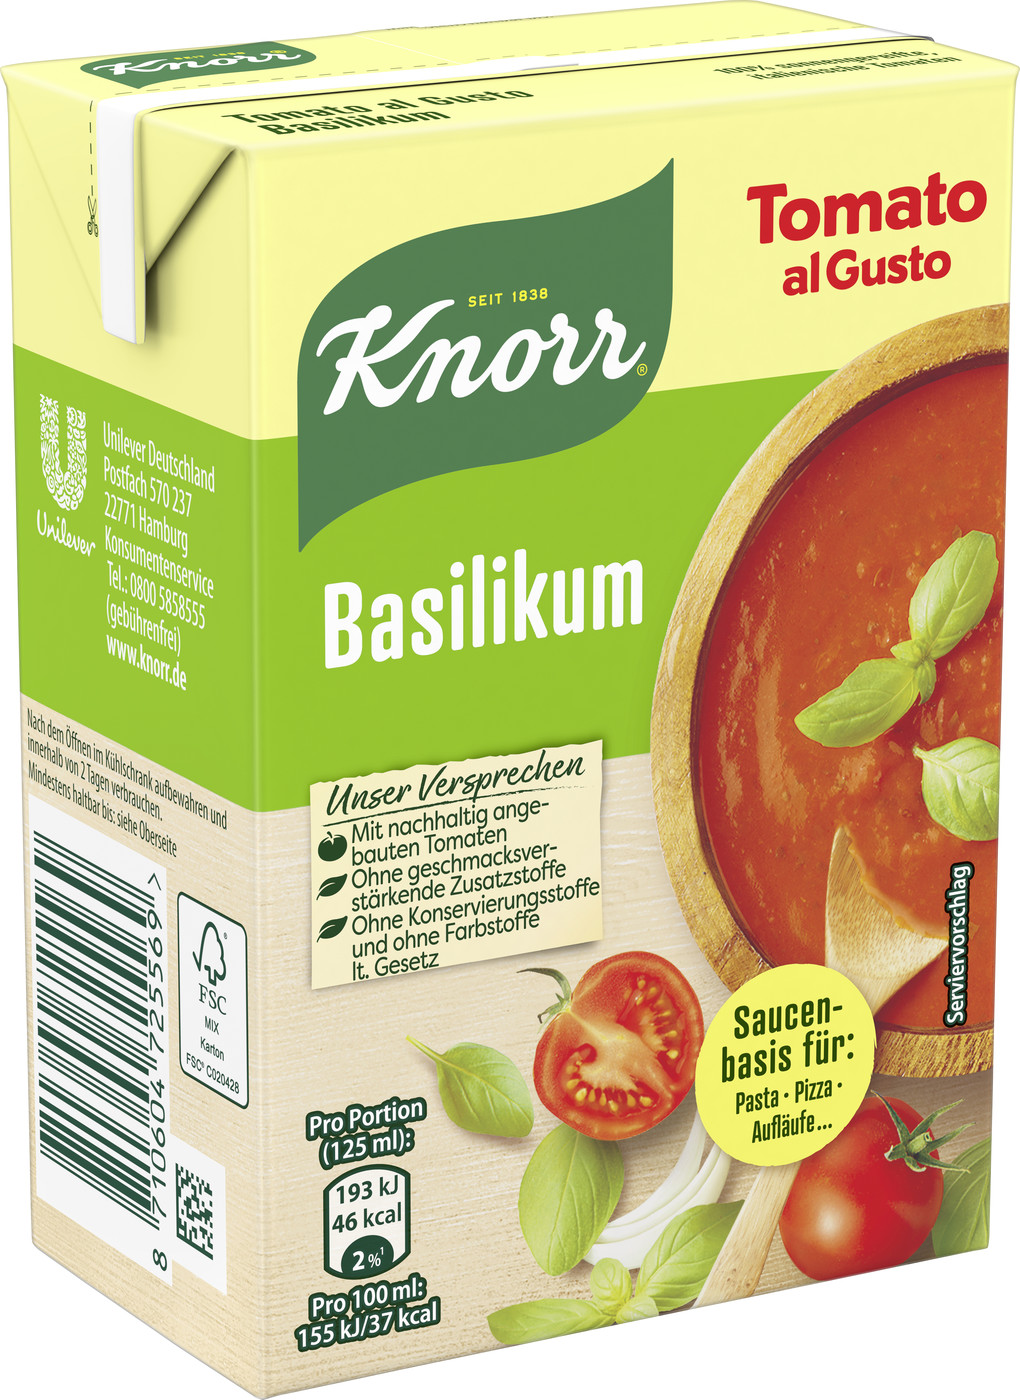 Knorr Tomato al Gusto Basilikum 370G